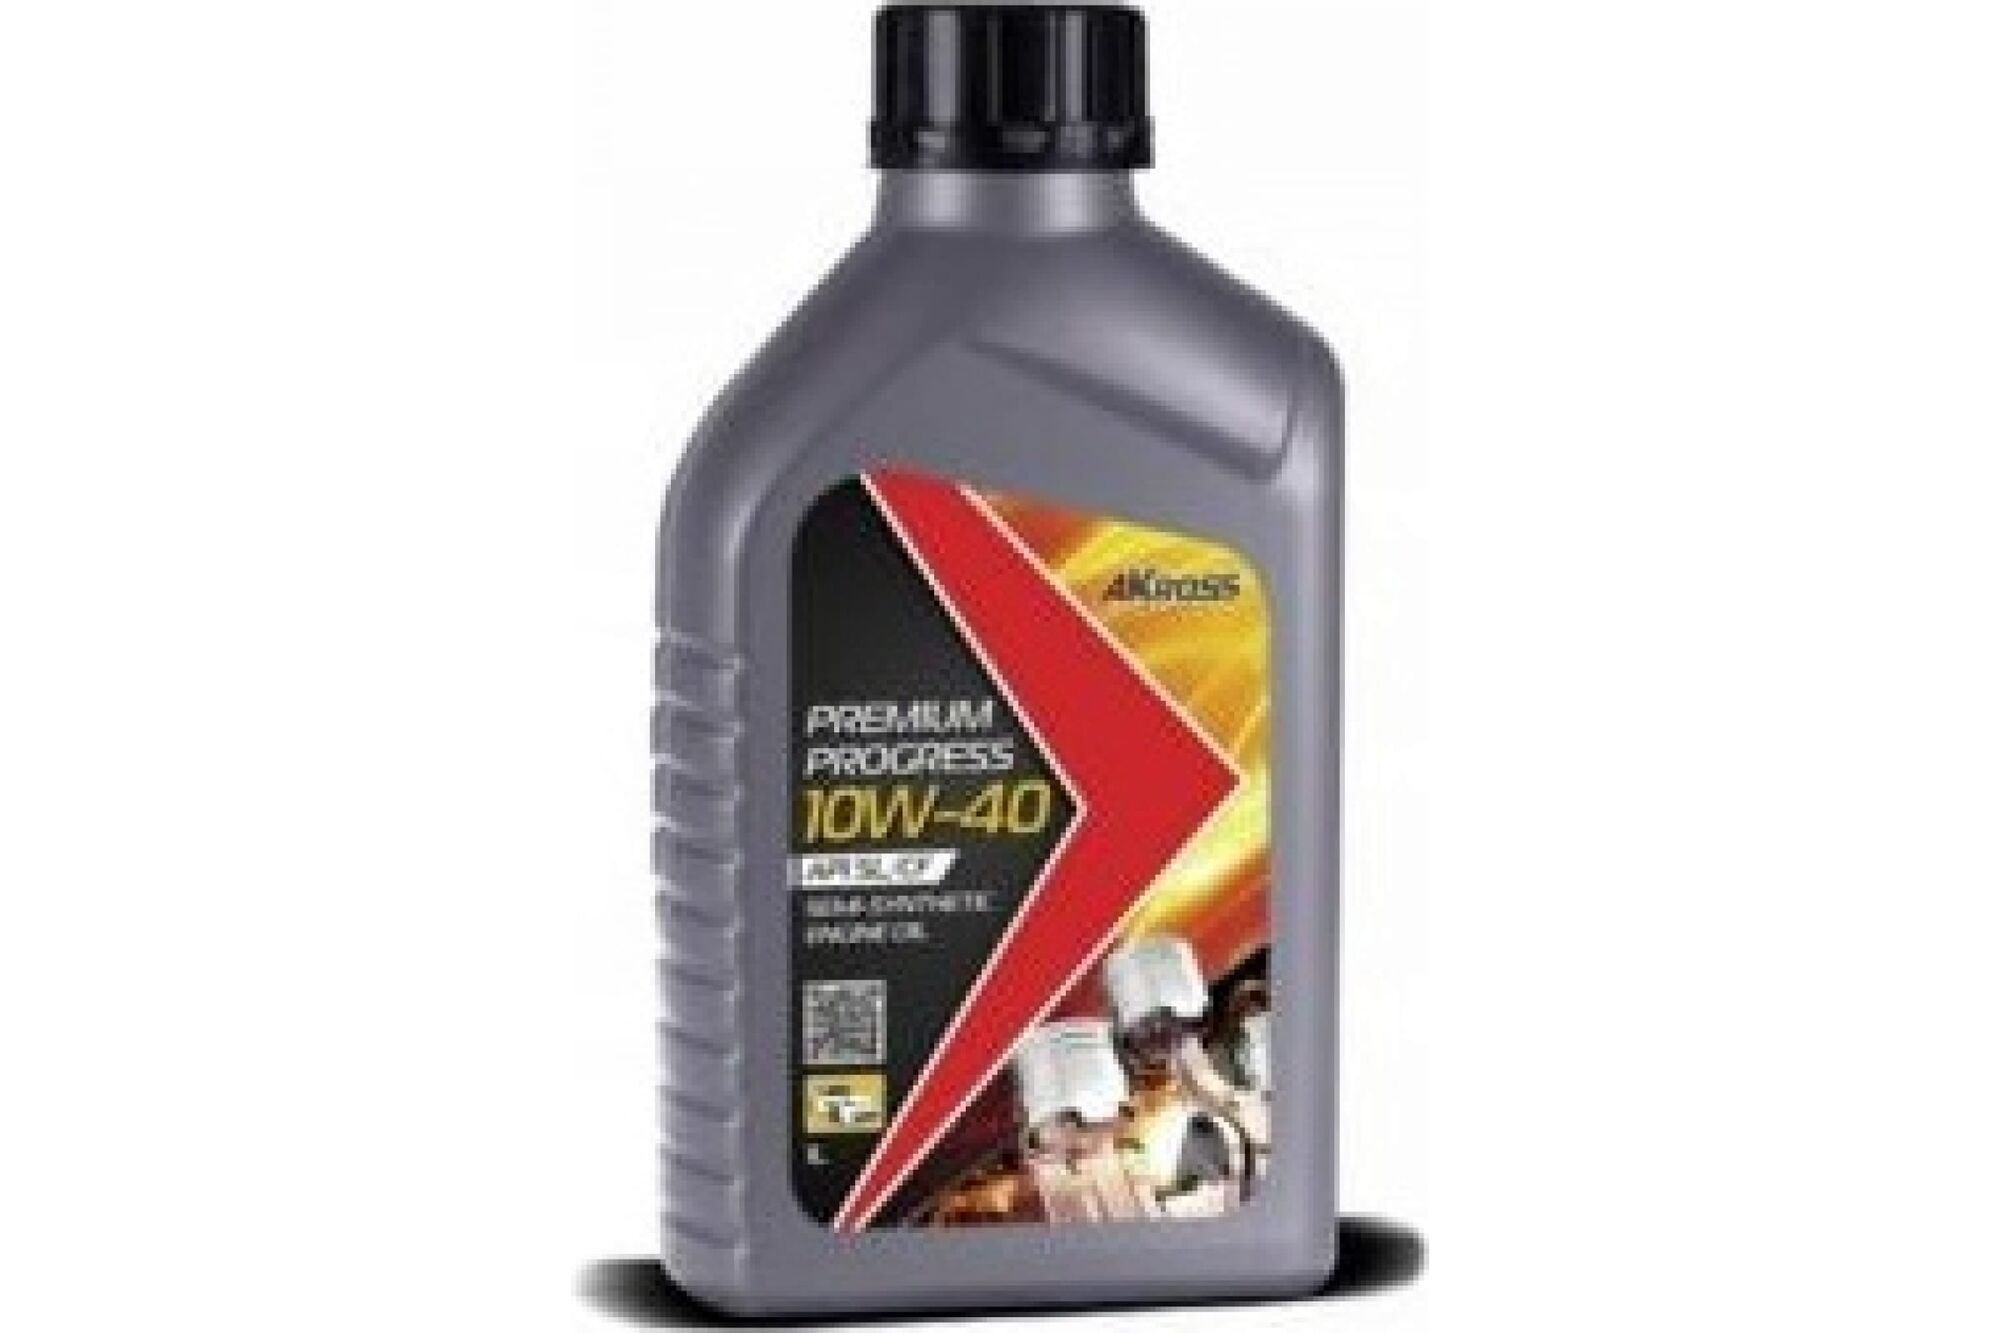 Моторное масло AKross PREMIUM PROGRESS полусинтетическое, 10W-40, SL/CF, 1 л AKS0001MOS